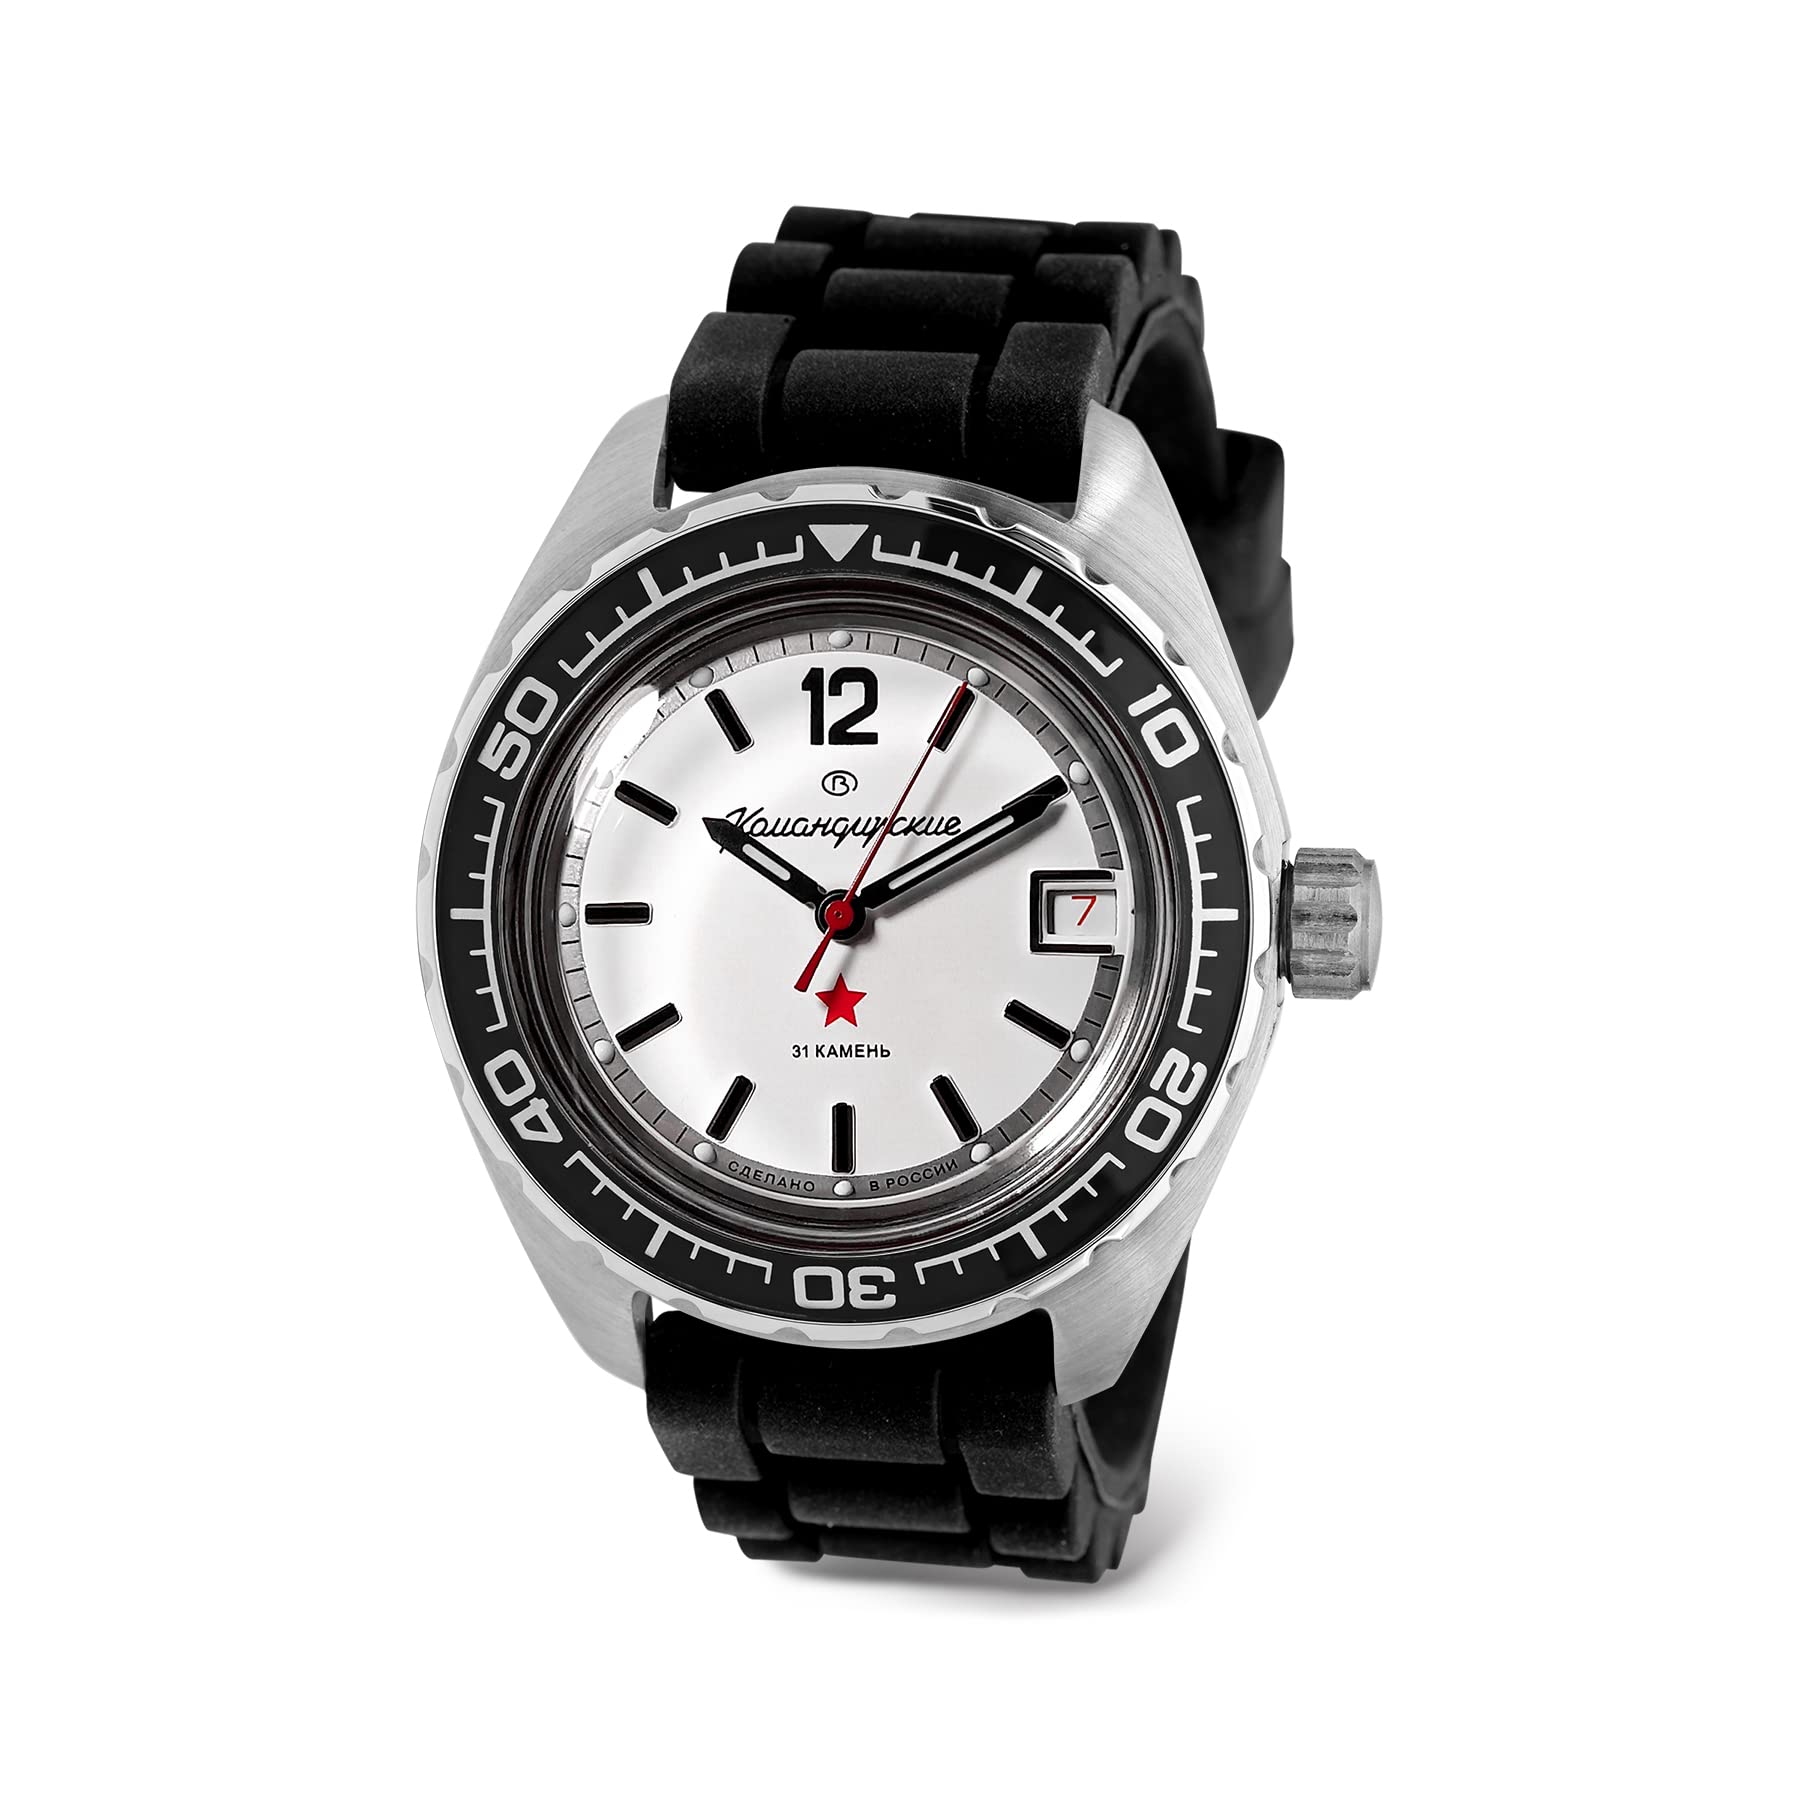 VOSTOK Komandirskie 02K Automatic Self-Winding Russian Military Diver Wrist Watch WR 200 m Fashion Business Casual